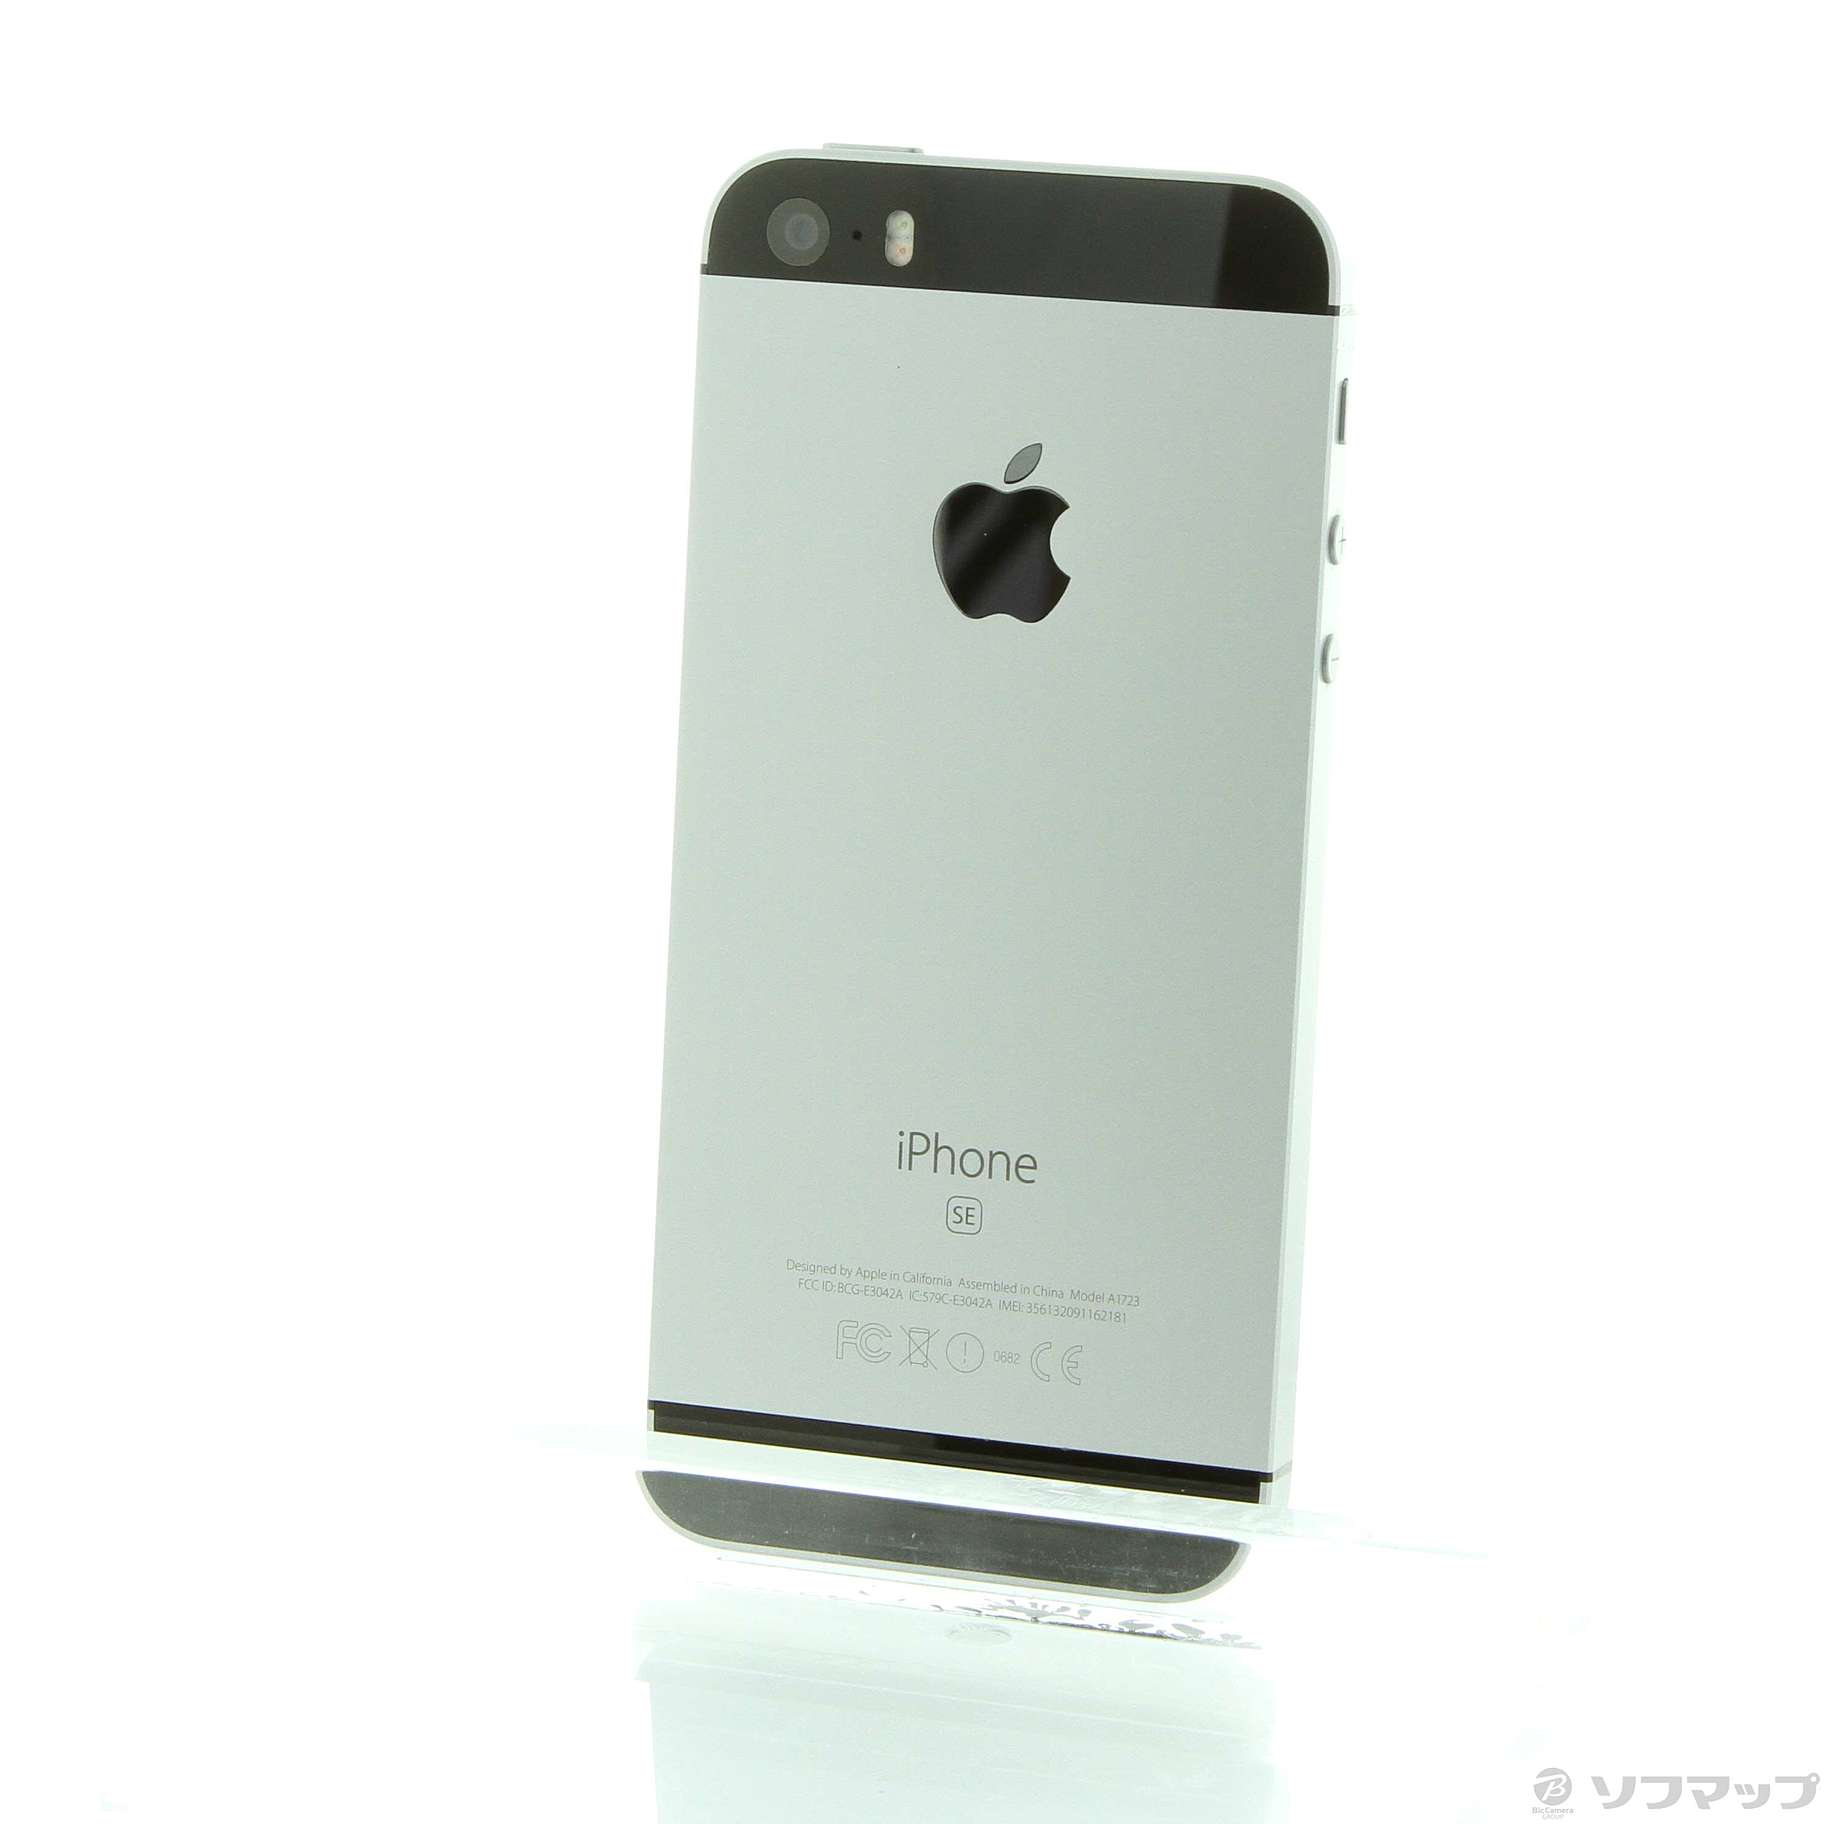 【Ka180】 iPhone 5s 16GB au スペースグレイ